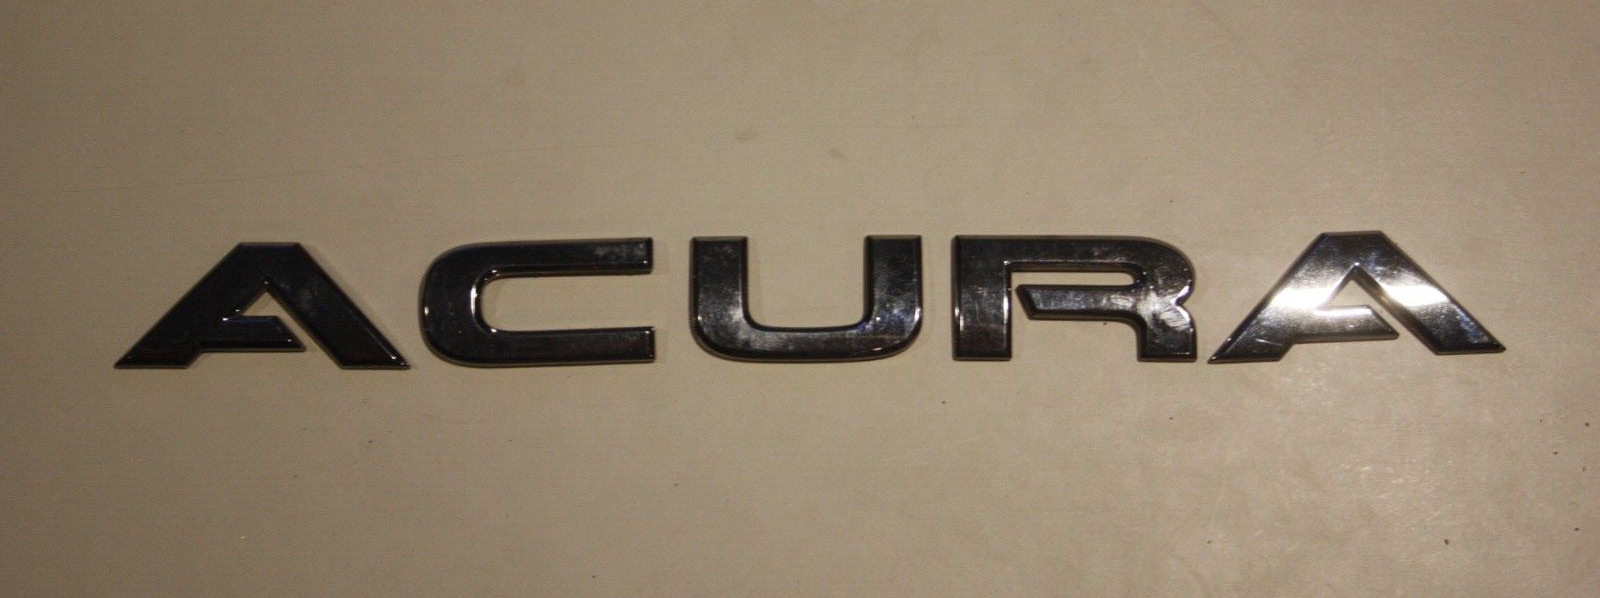 1999-2003 Acura 3.2 TL CL 3.2CL 3.2TL Rear Trunk Deck Lid Nameplate Emblems